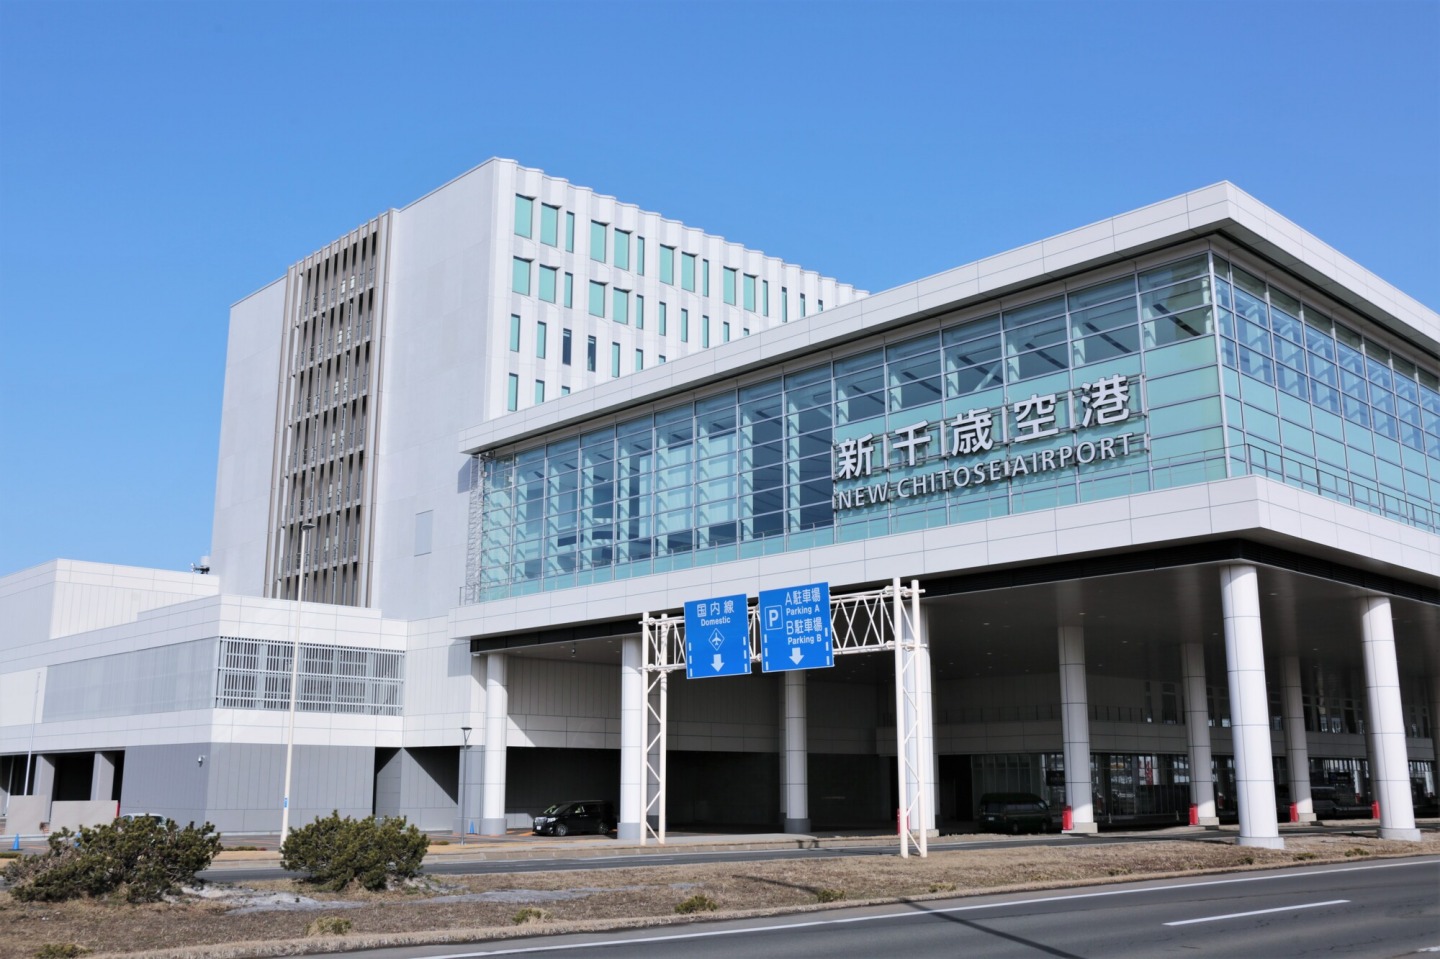 New Chitose Airport: One of Hokkaido’s Key Flight Paths